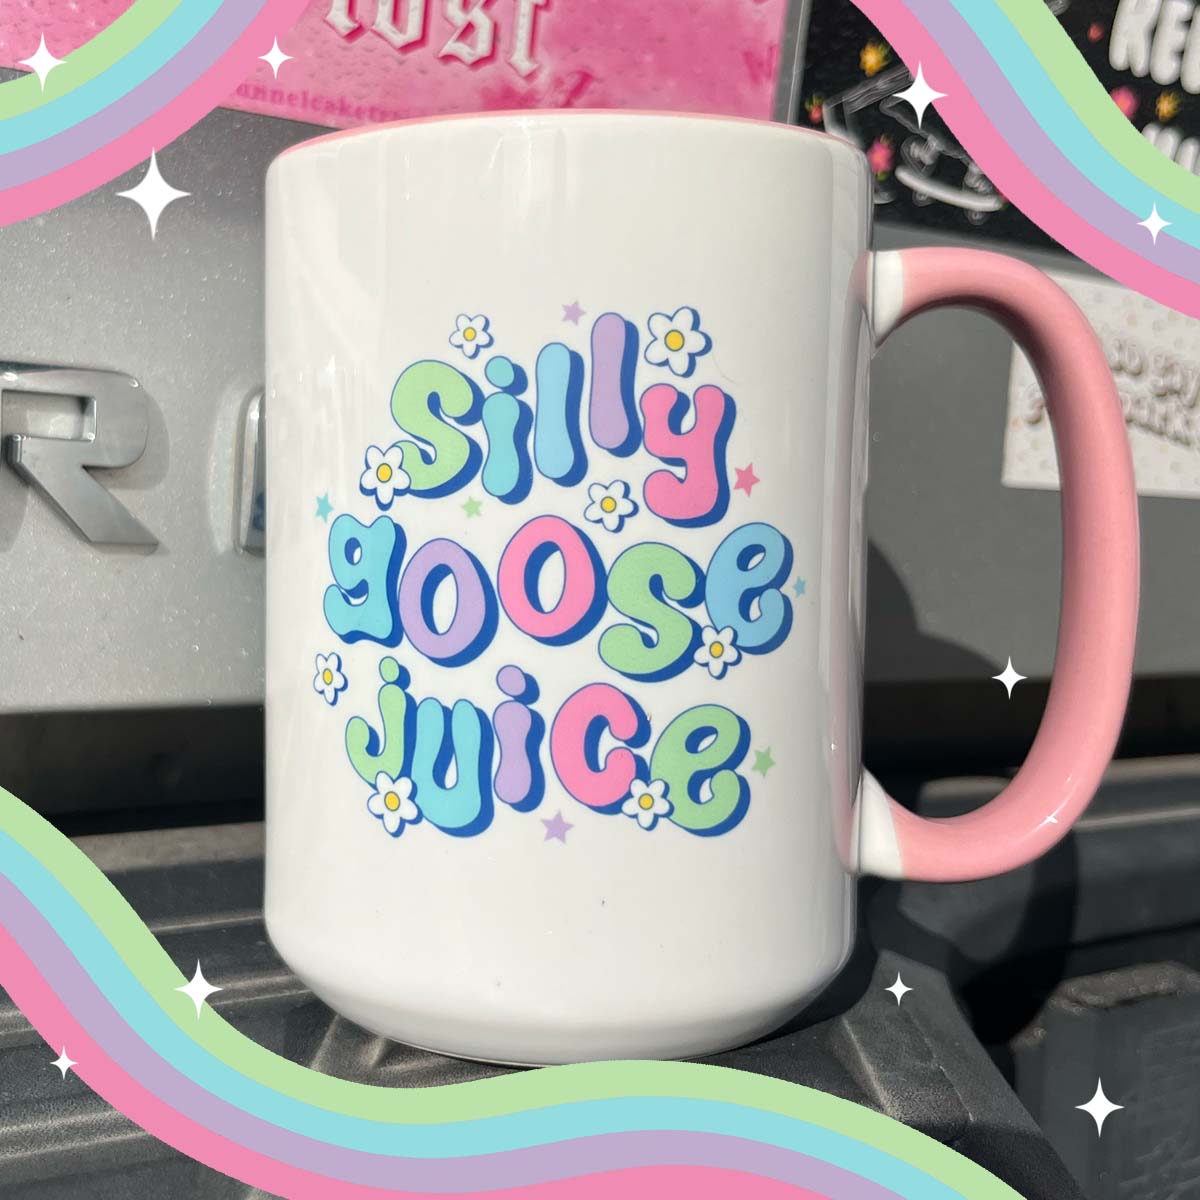 Silly Goose Juice Handpressed 15oz Mug